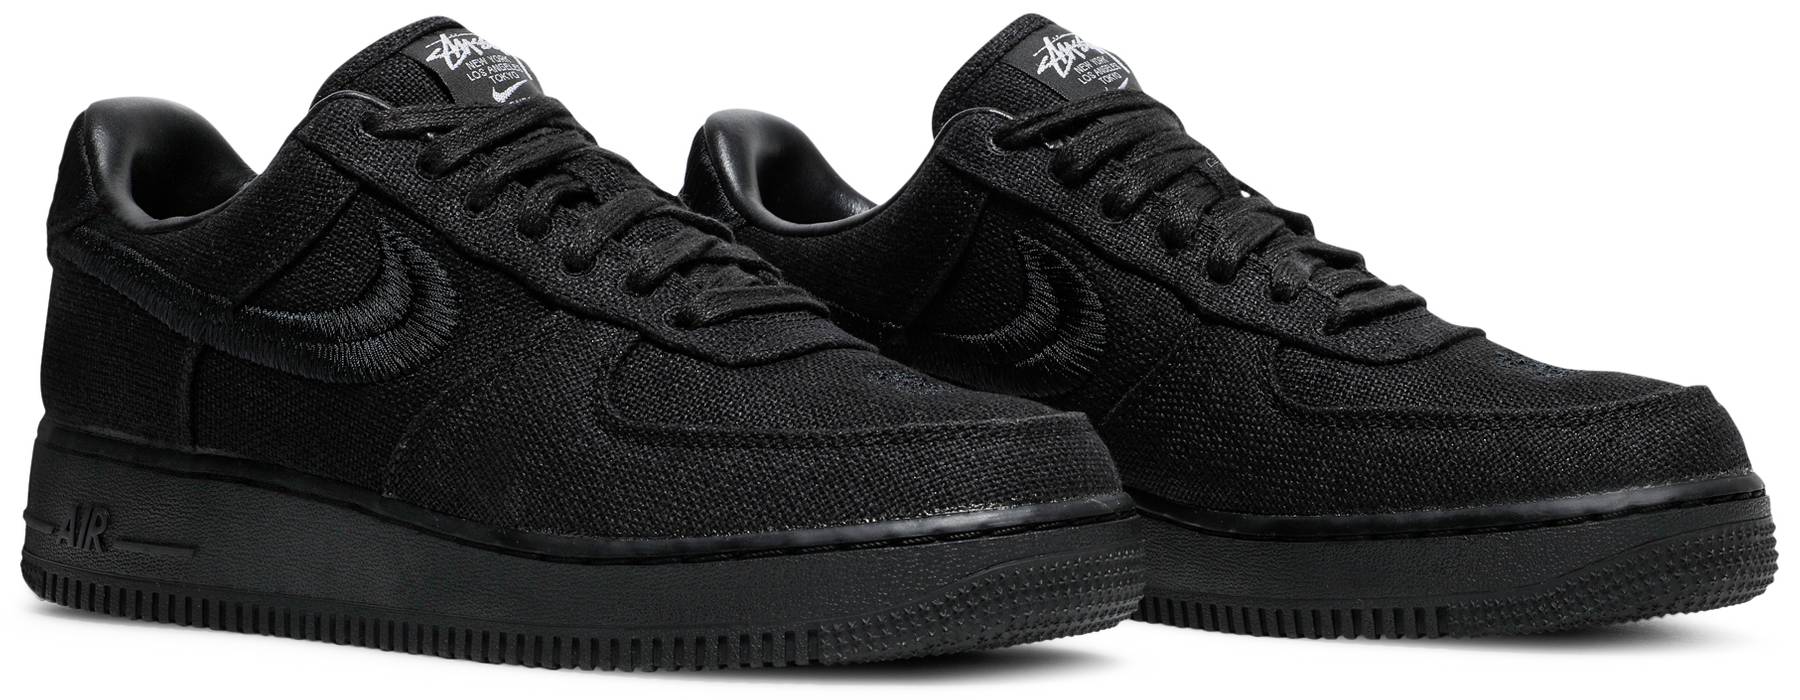 Stussy x Nike Air Force 1 Low Triple Black » Sneakers Joint